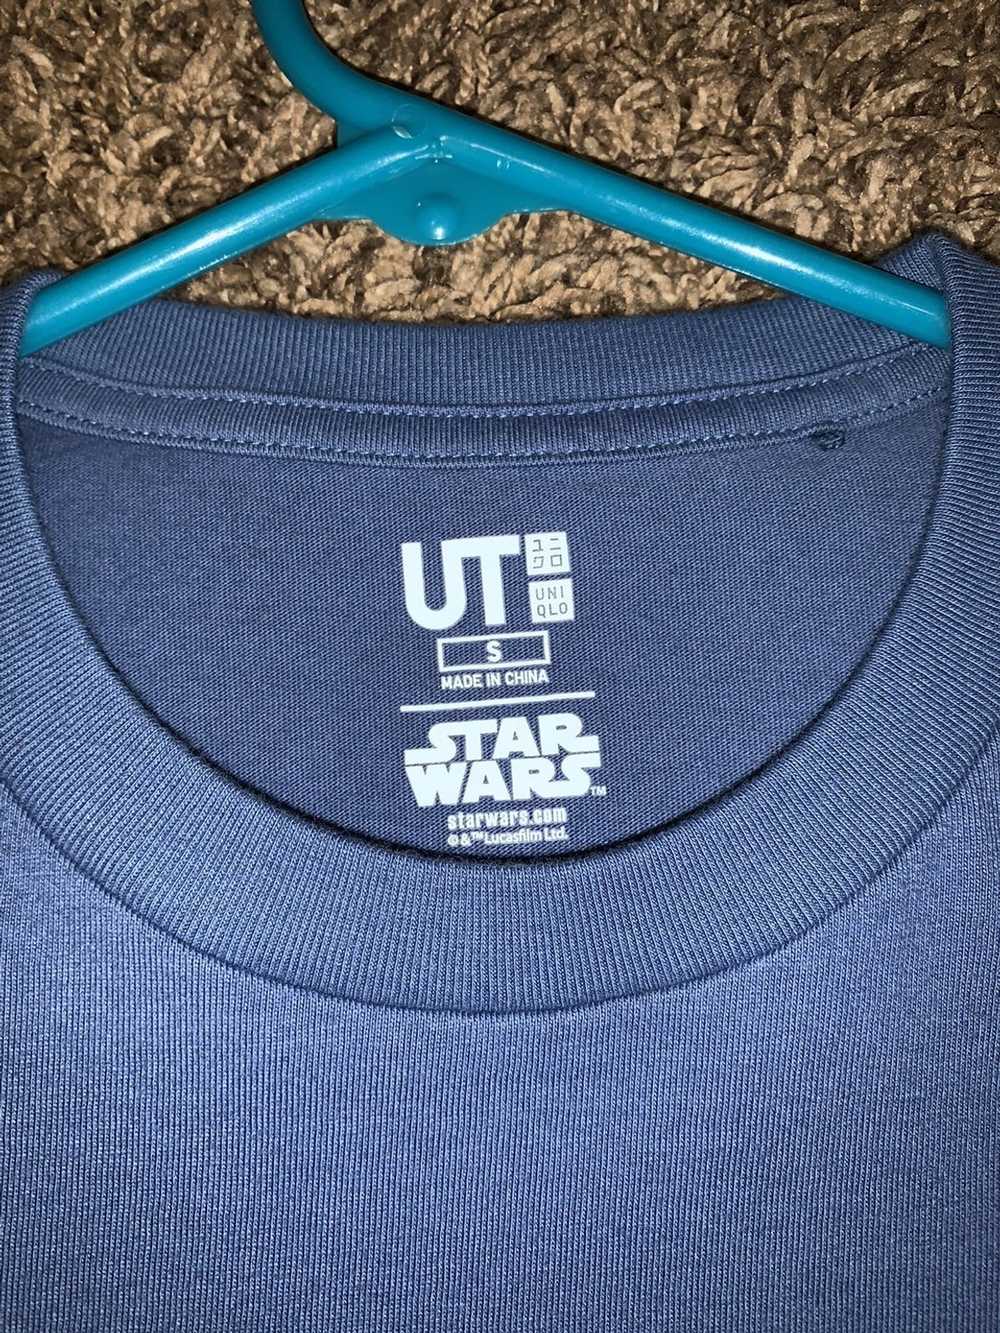 Star Wars × Uniqlo Uniqlo Star Wars T-Shirt - image 4